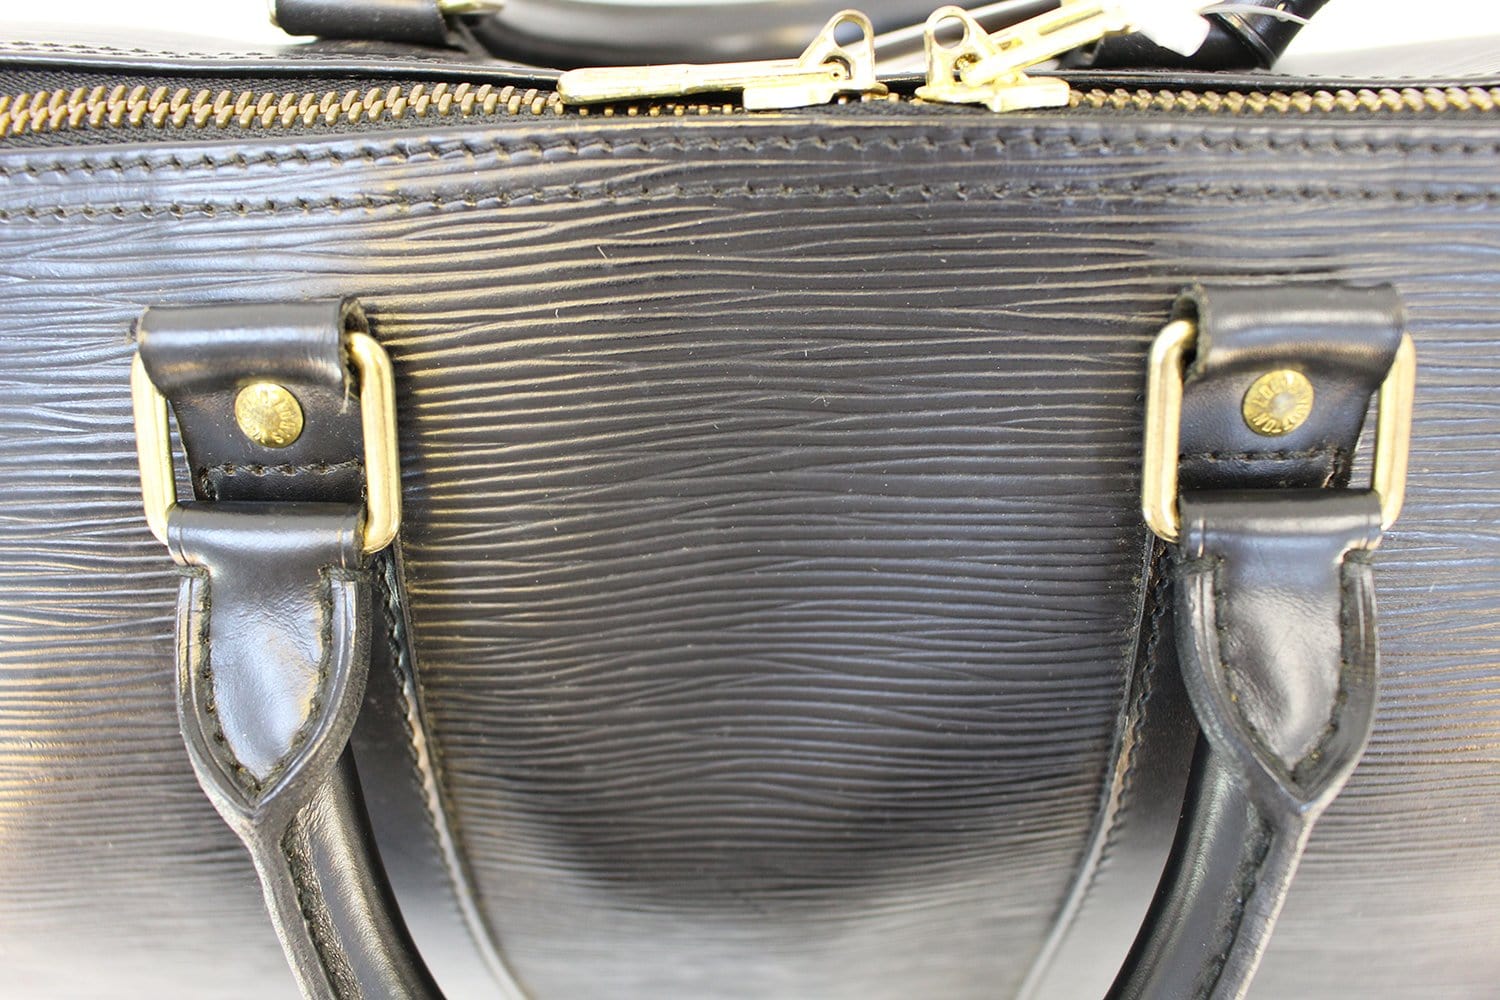 Louis Vuitton Black Epi Leather Noir Keepall 45 Duffle Bag 1119lv46